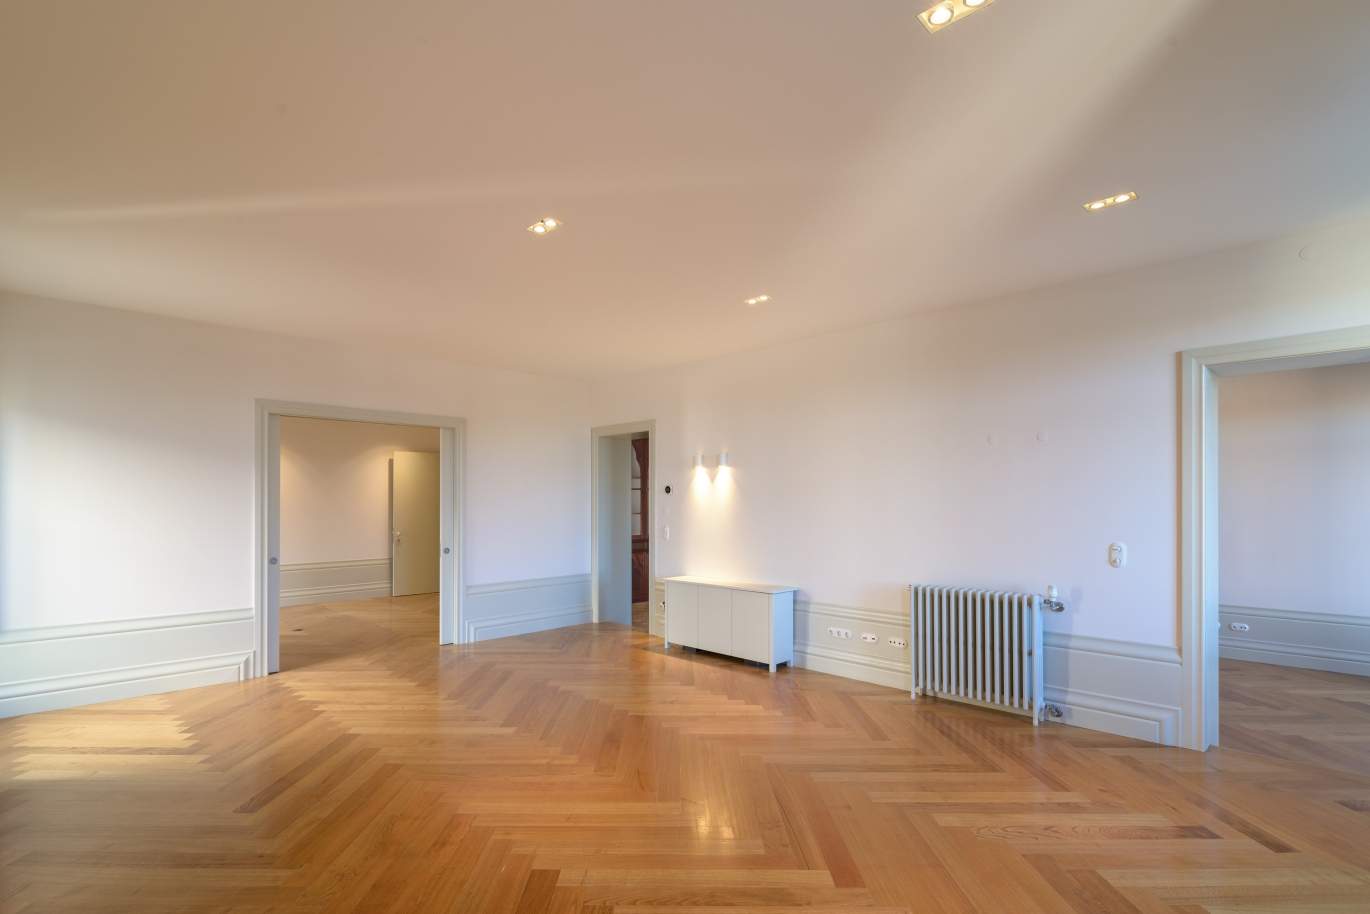 New apartment for sale in luxury development, Cedofeita,Porto,Portugal_161689